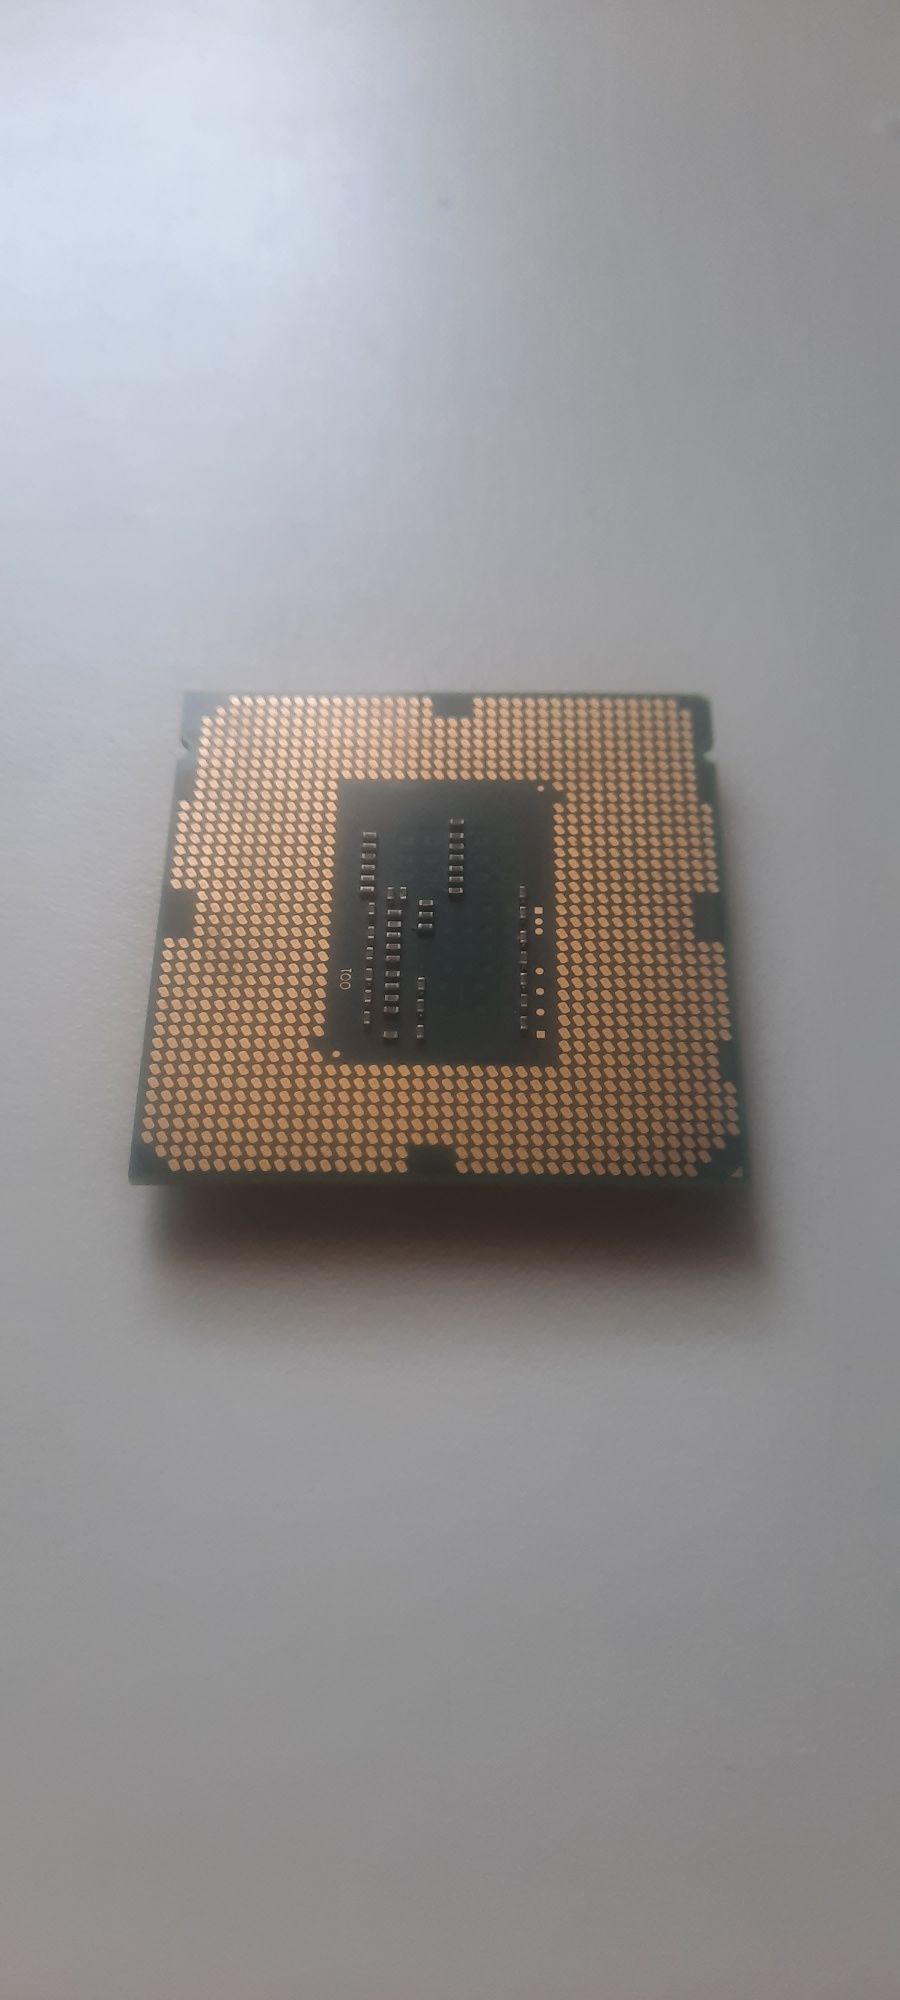 Procesor Intel core i3-4130